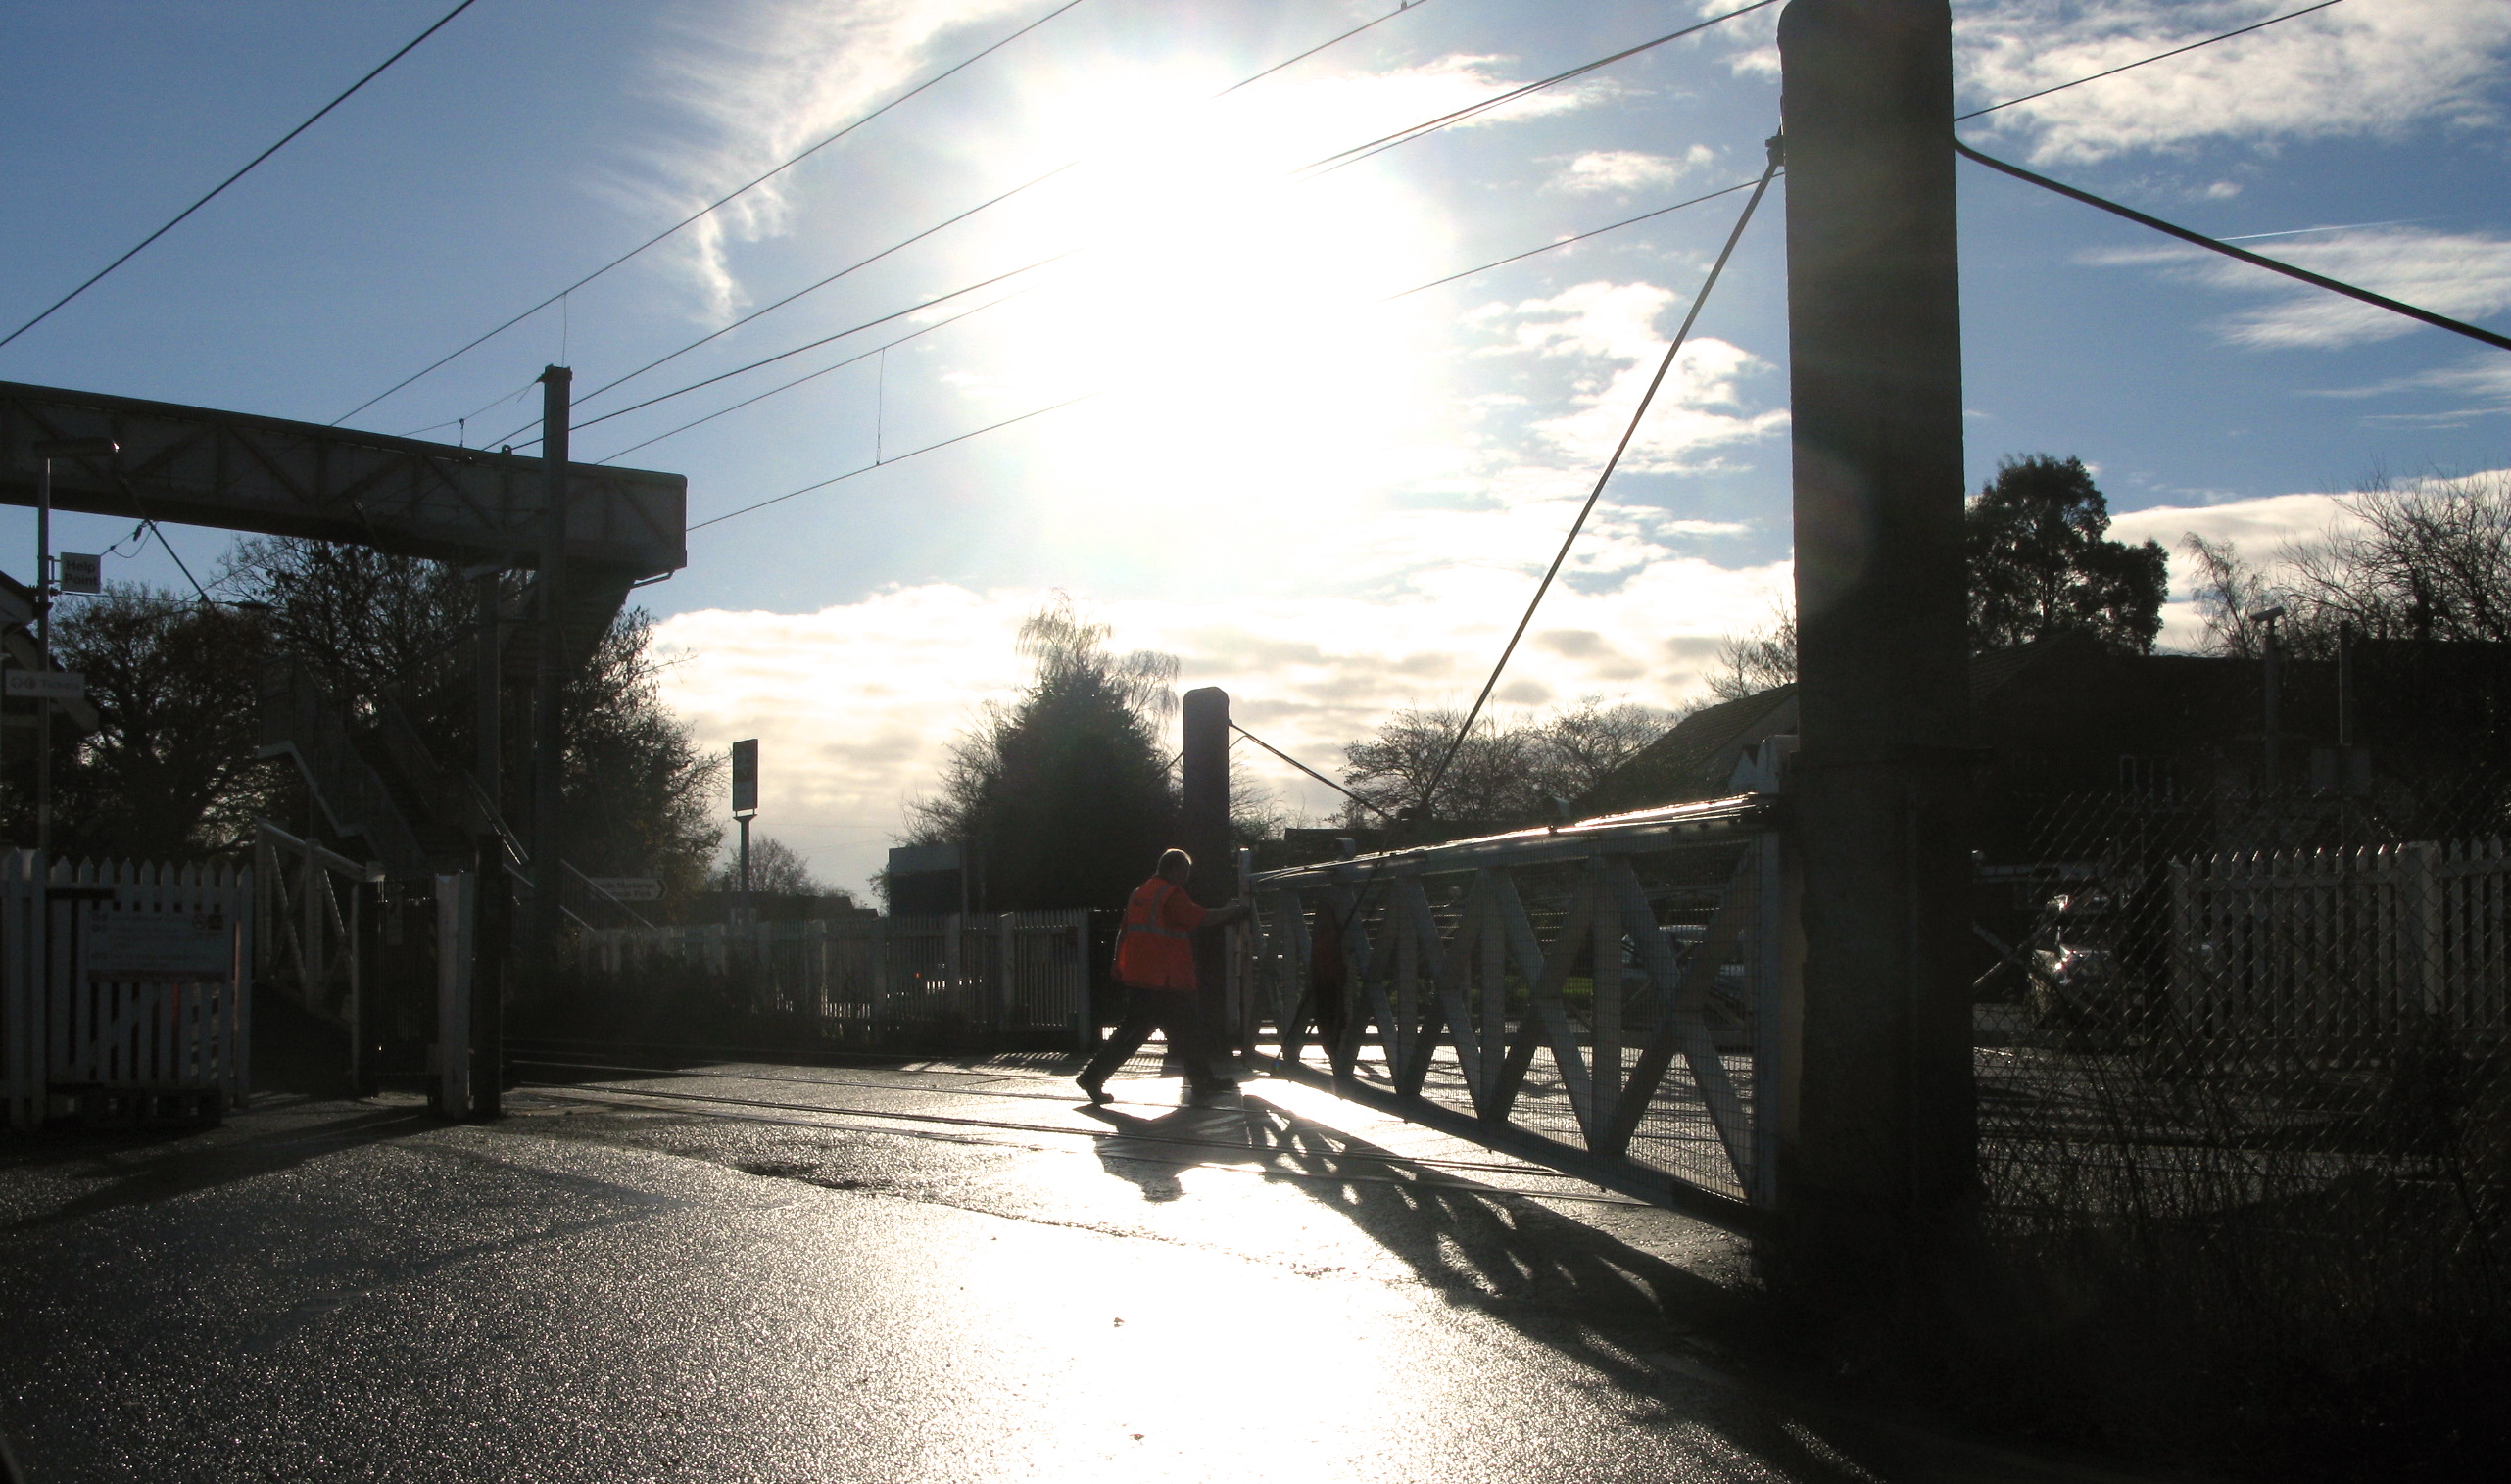 Elsenham level crossing keeper opens road gates December 2013 (Photo: © London Intelligence)